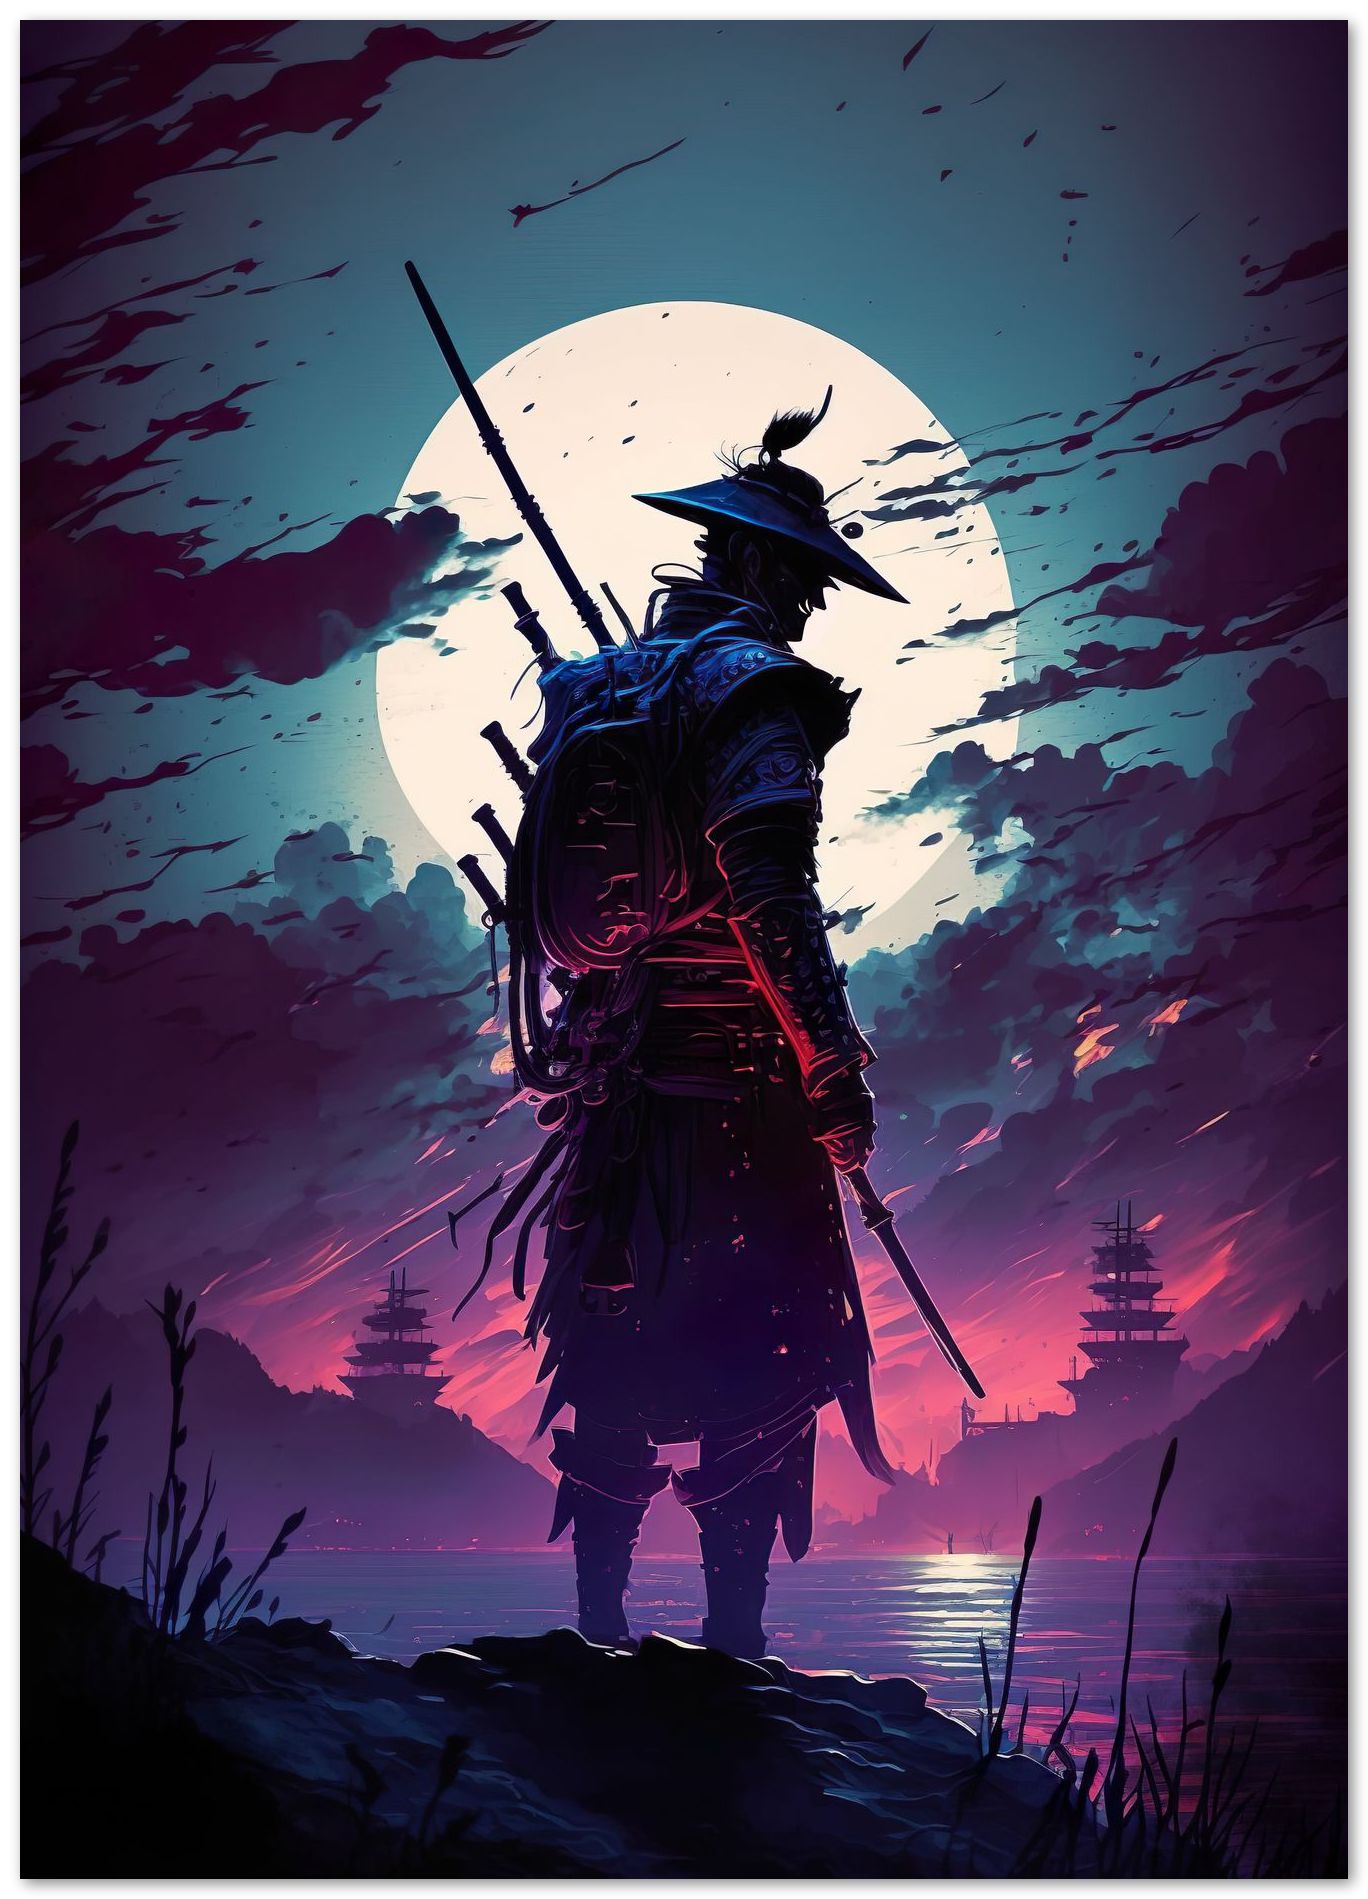 Samurai warrior standing ready to fight - @Onexstudio